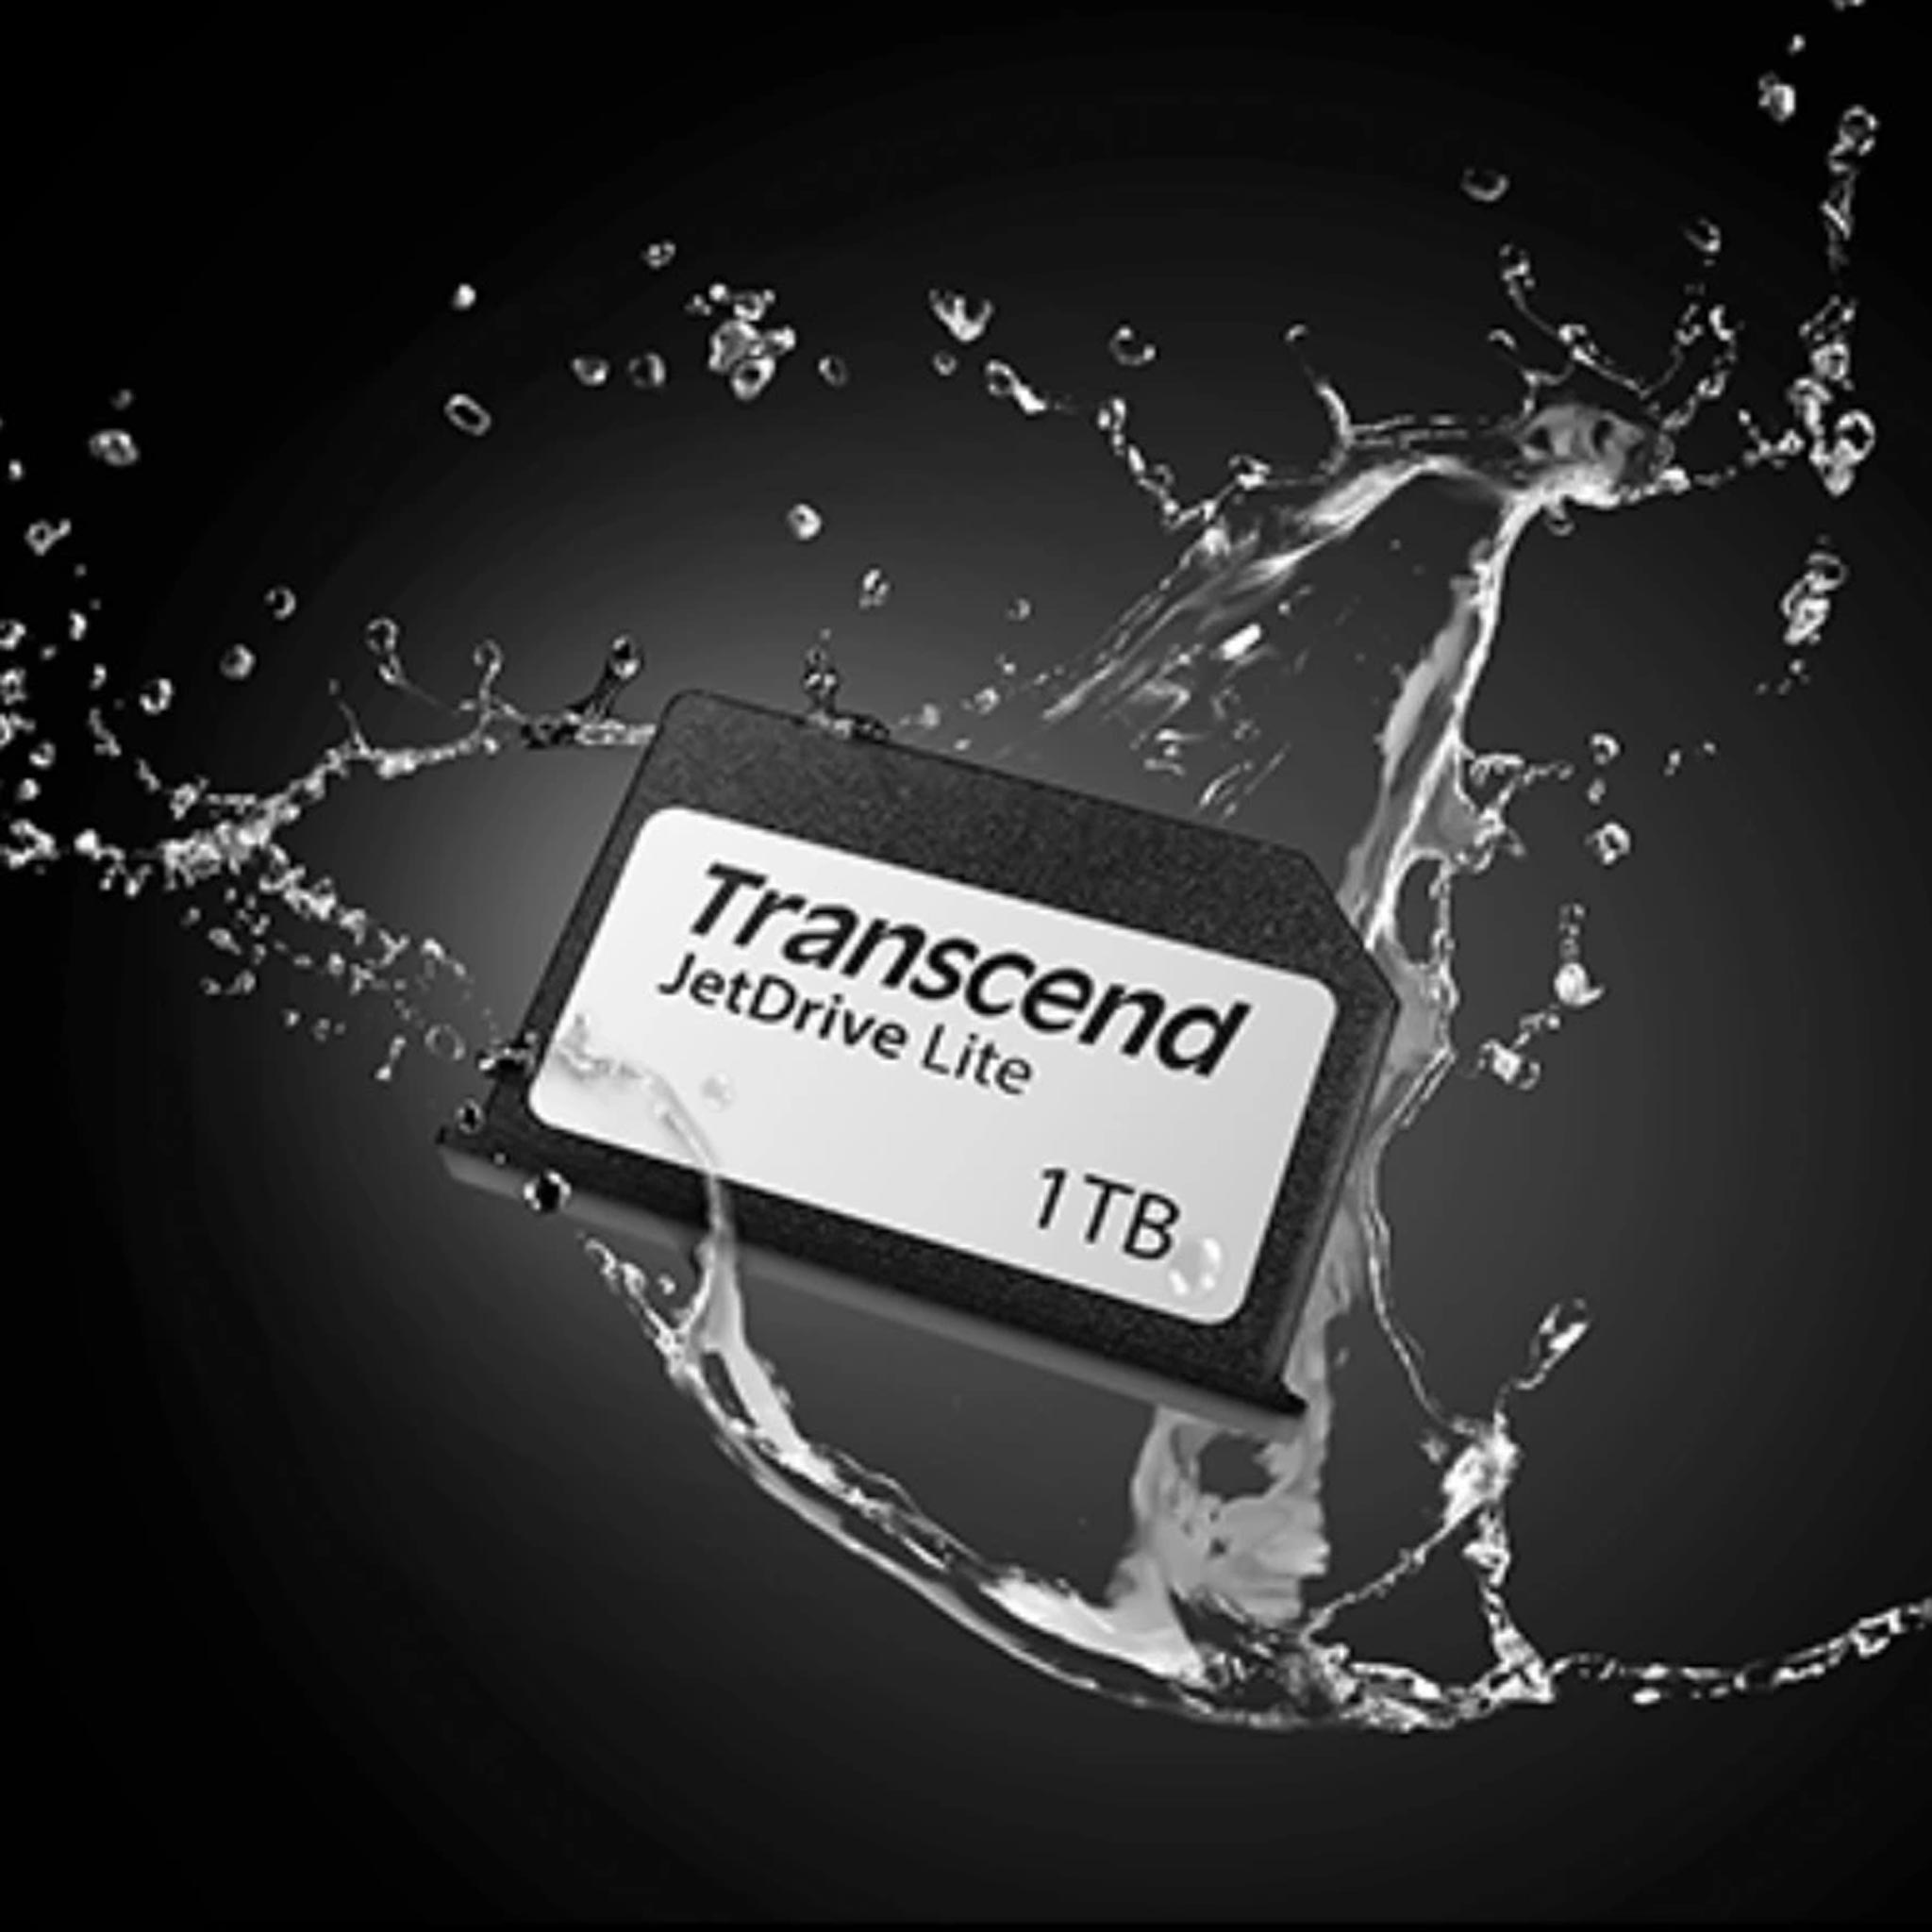 transcend-jetdrive-1TB-sd-card-macbook-pro_1.jpg